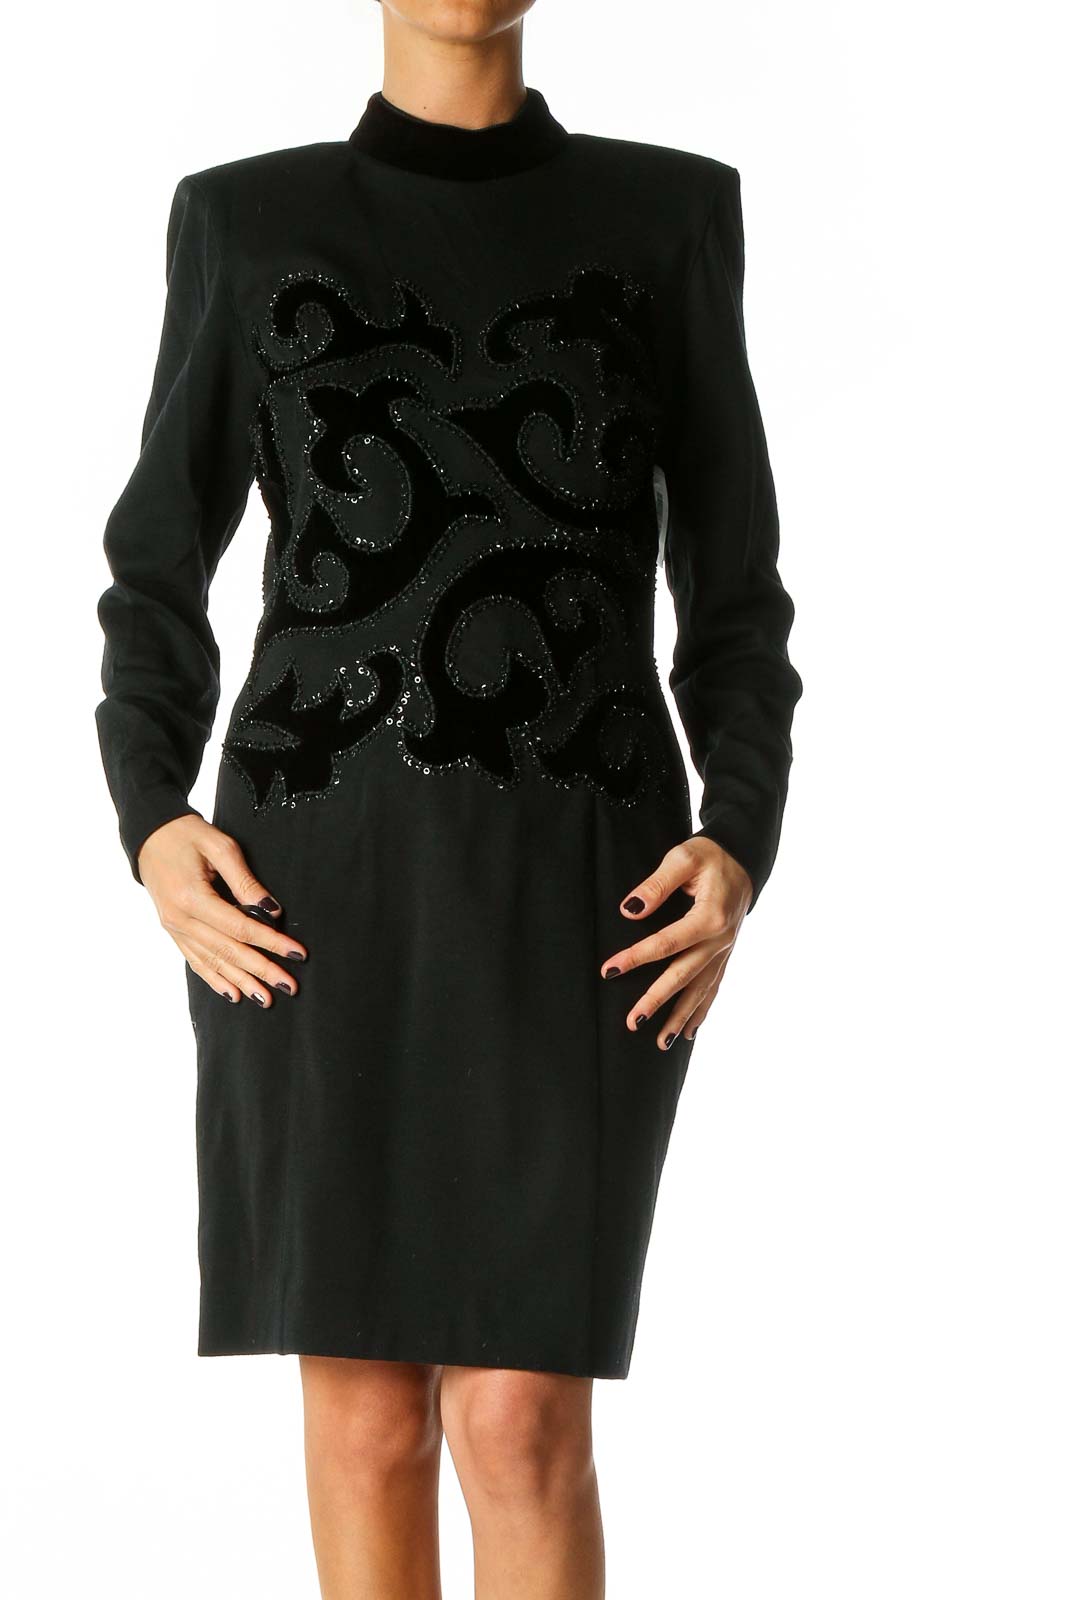 Black Textured Cocktail Sheath Dress Front